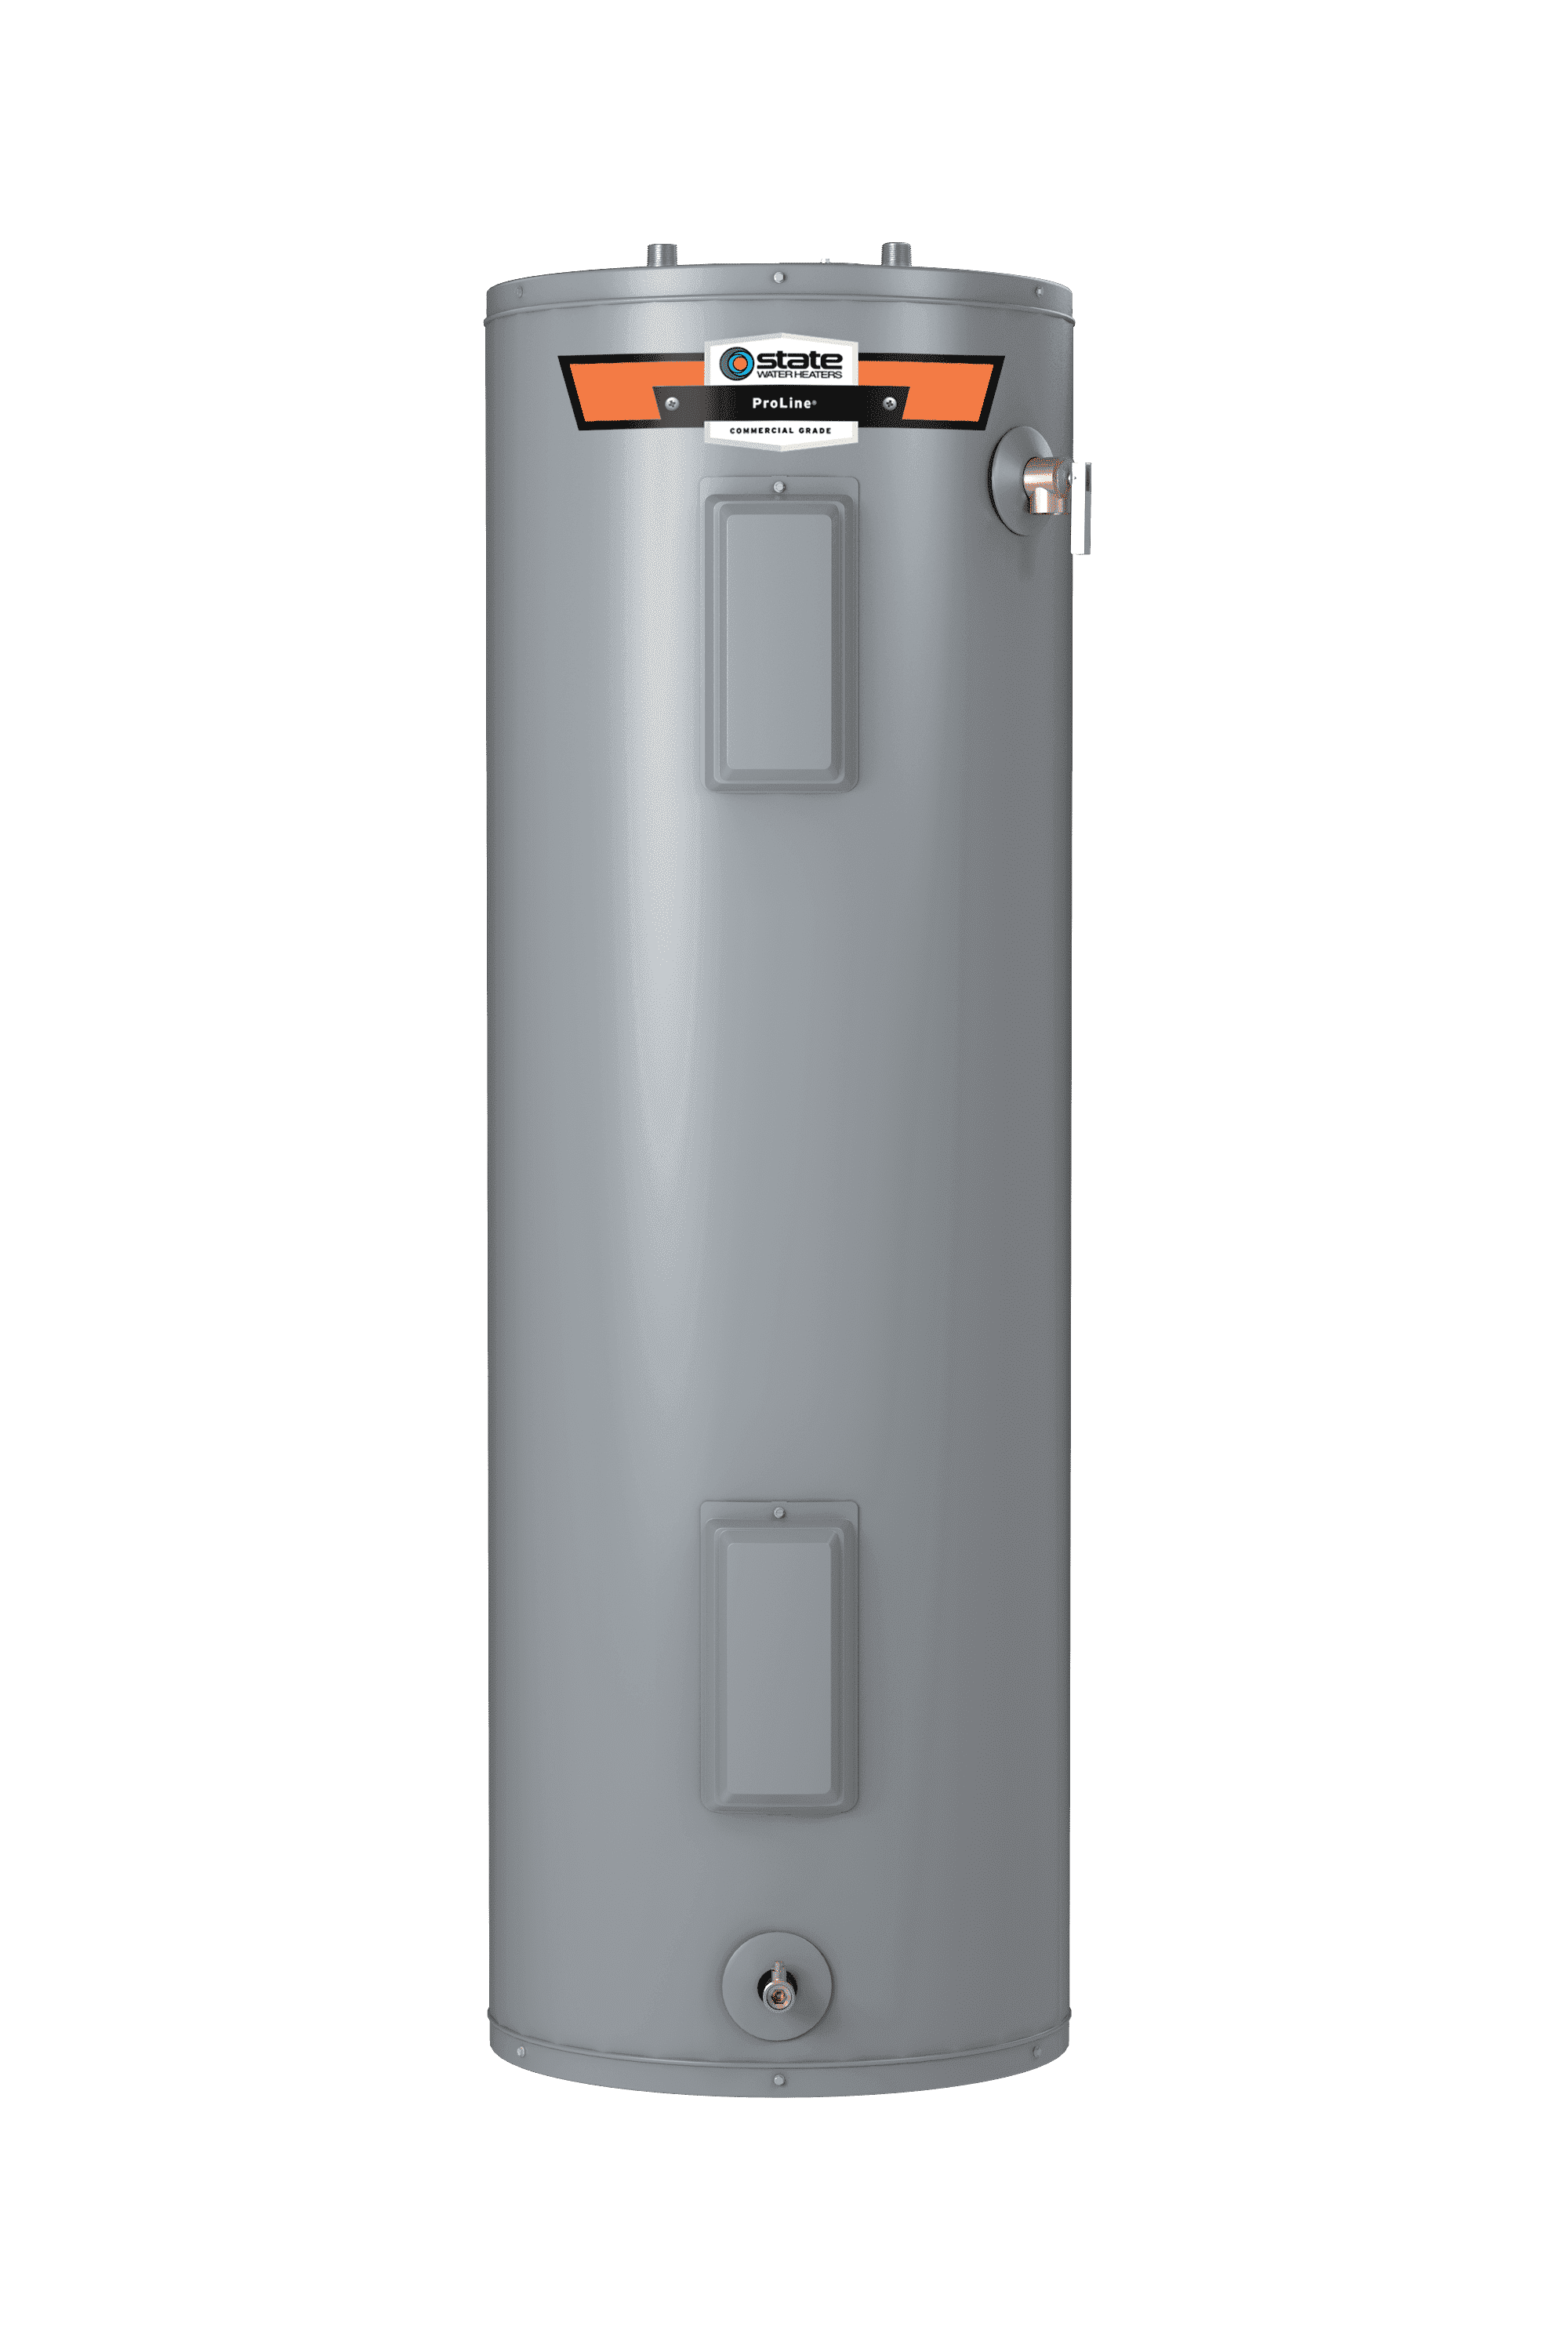 Proline Standard Electric Water Heater